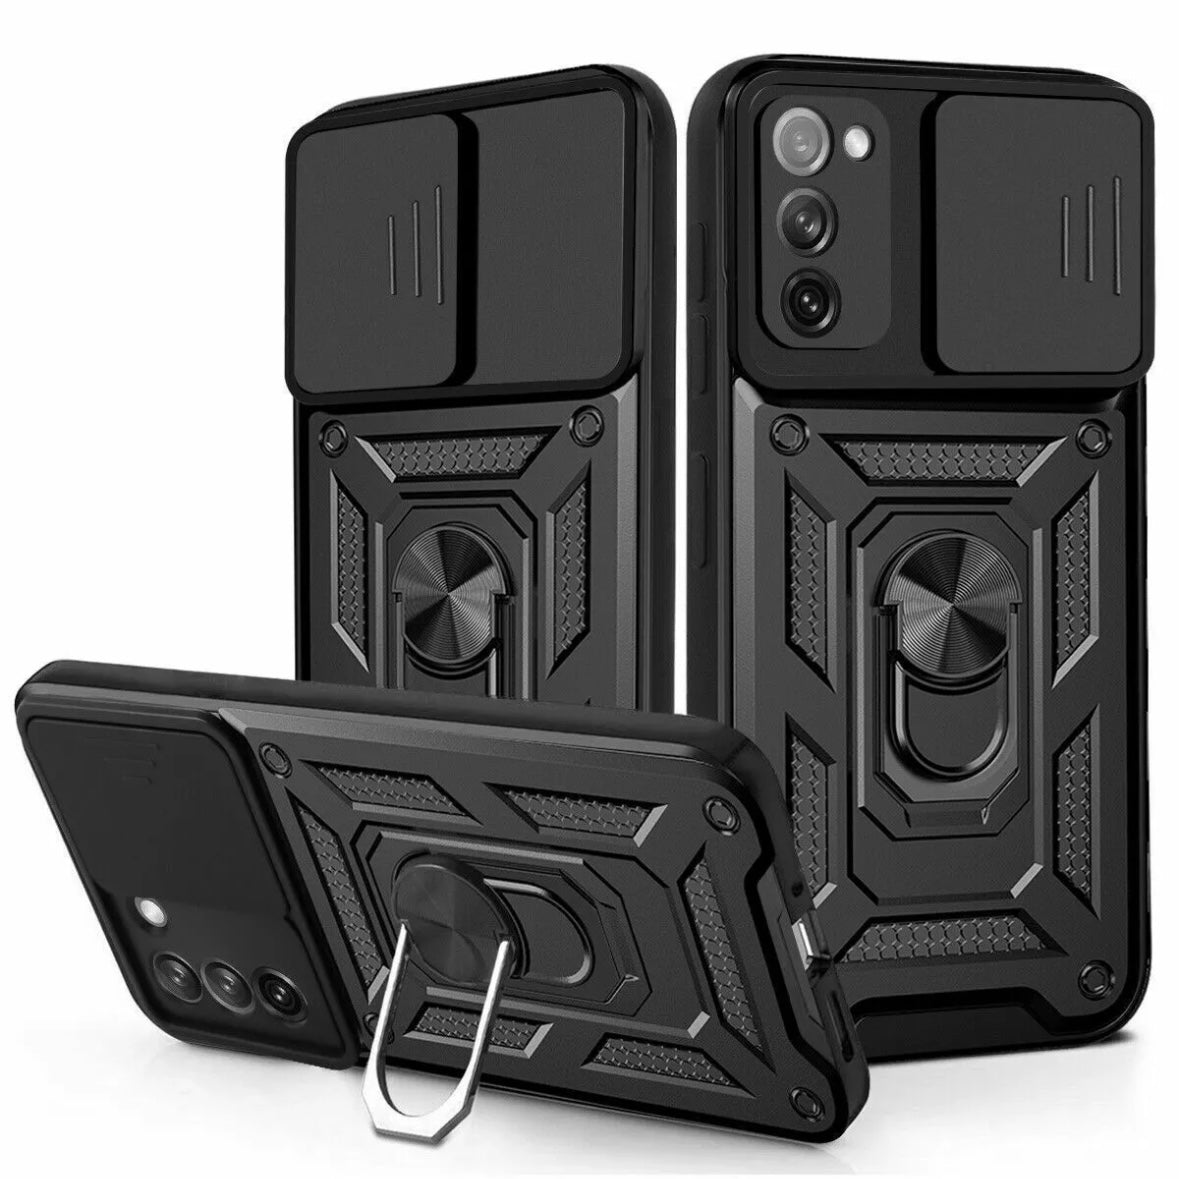 Tough Armour Tactical Grade Protection Rear Case for iPhone